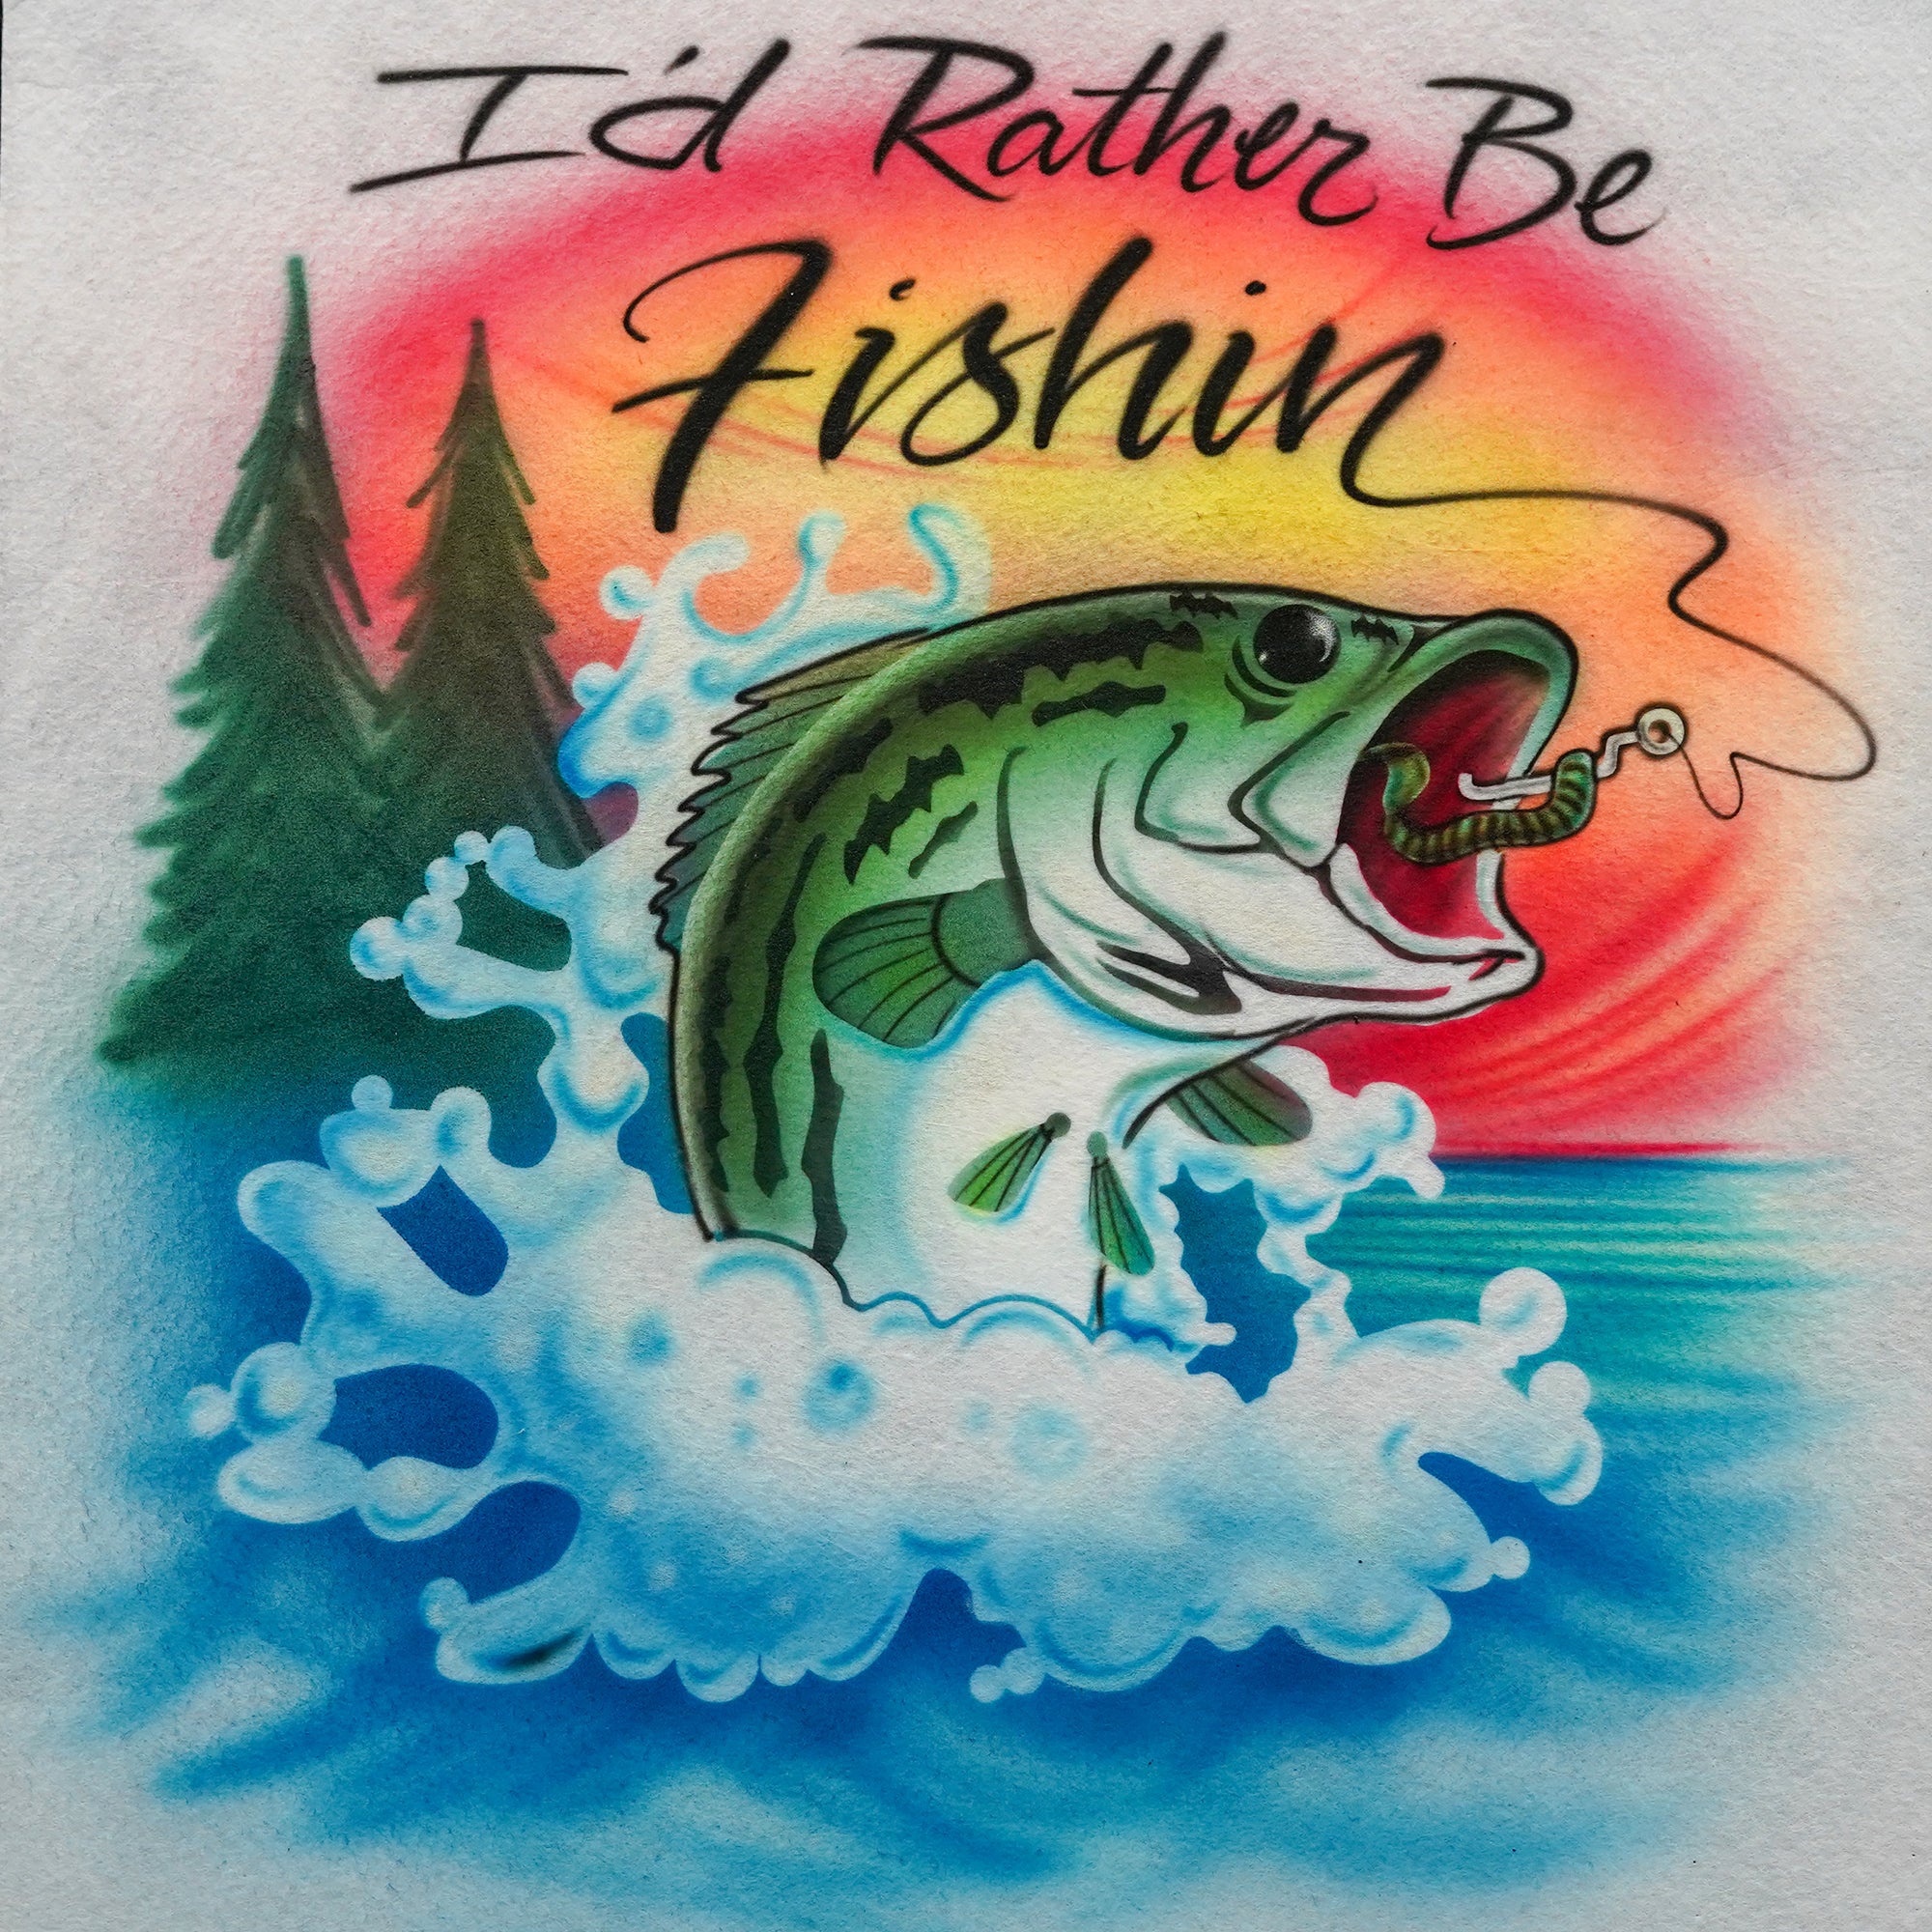 Rather Be Fishing T-Shirt